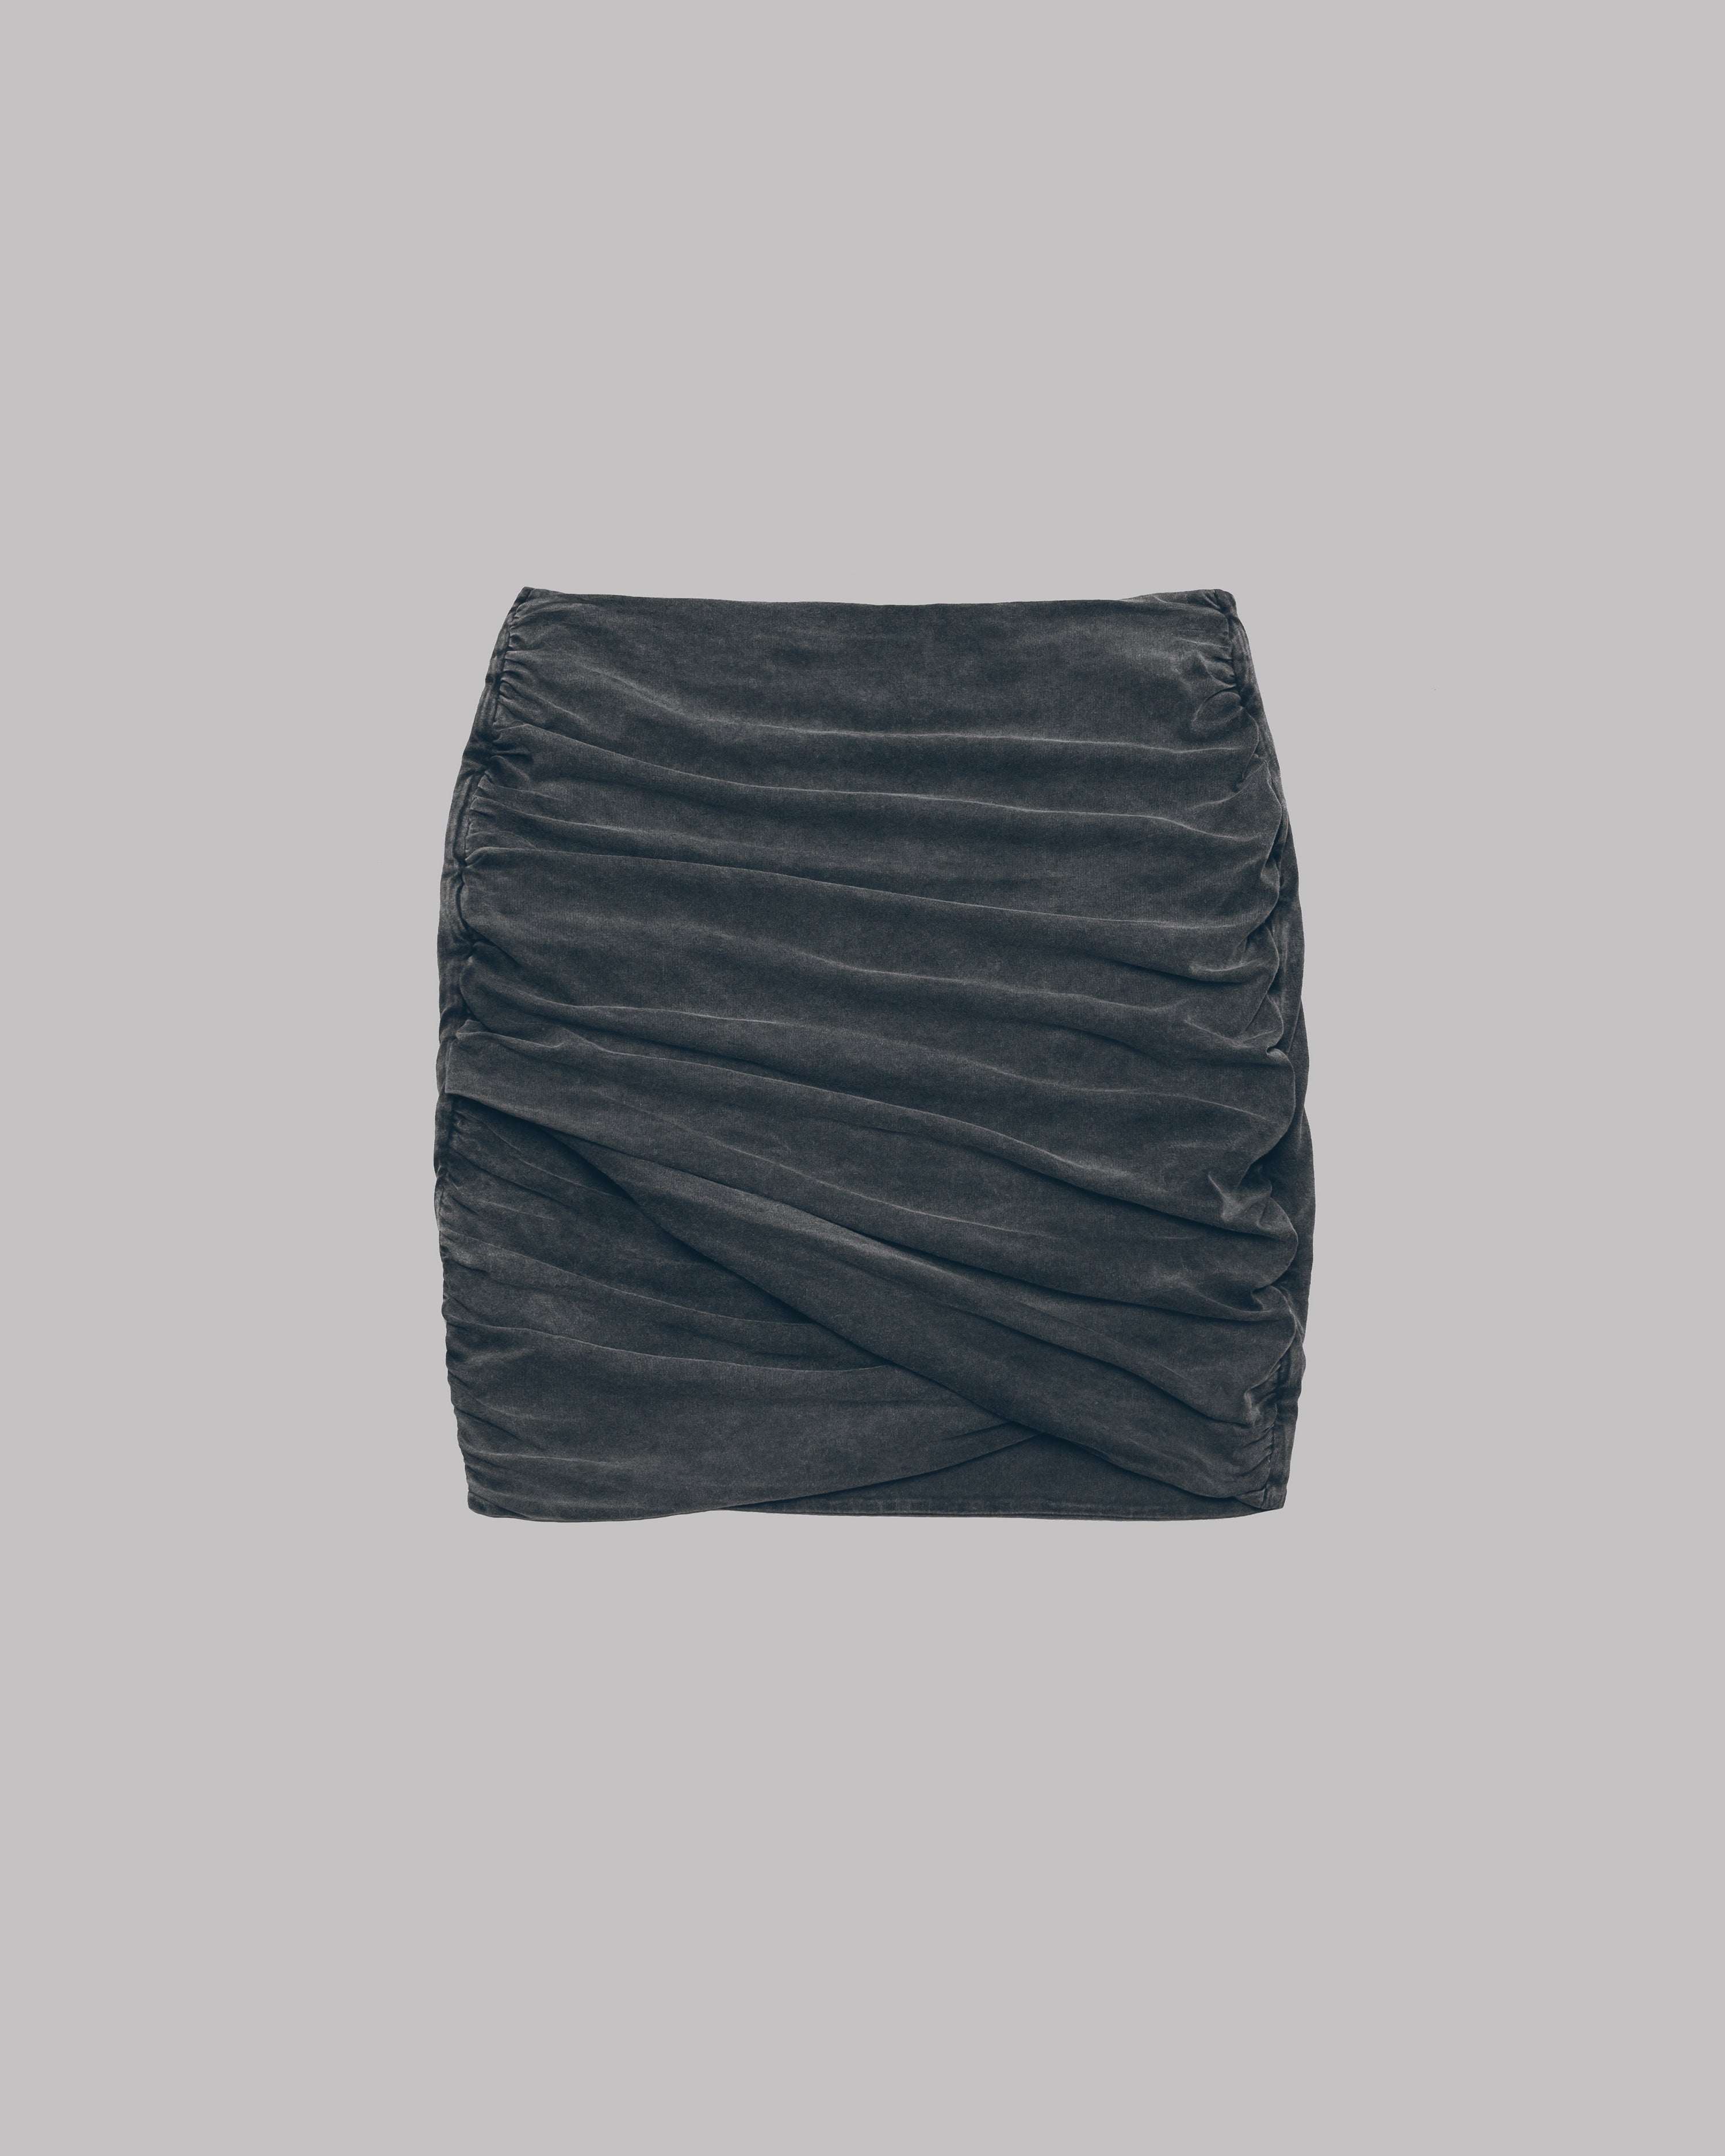 The Dark Faded Draped Skirt